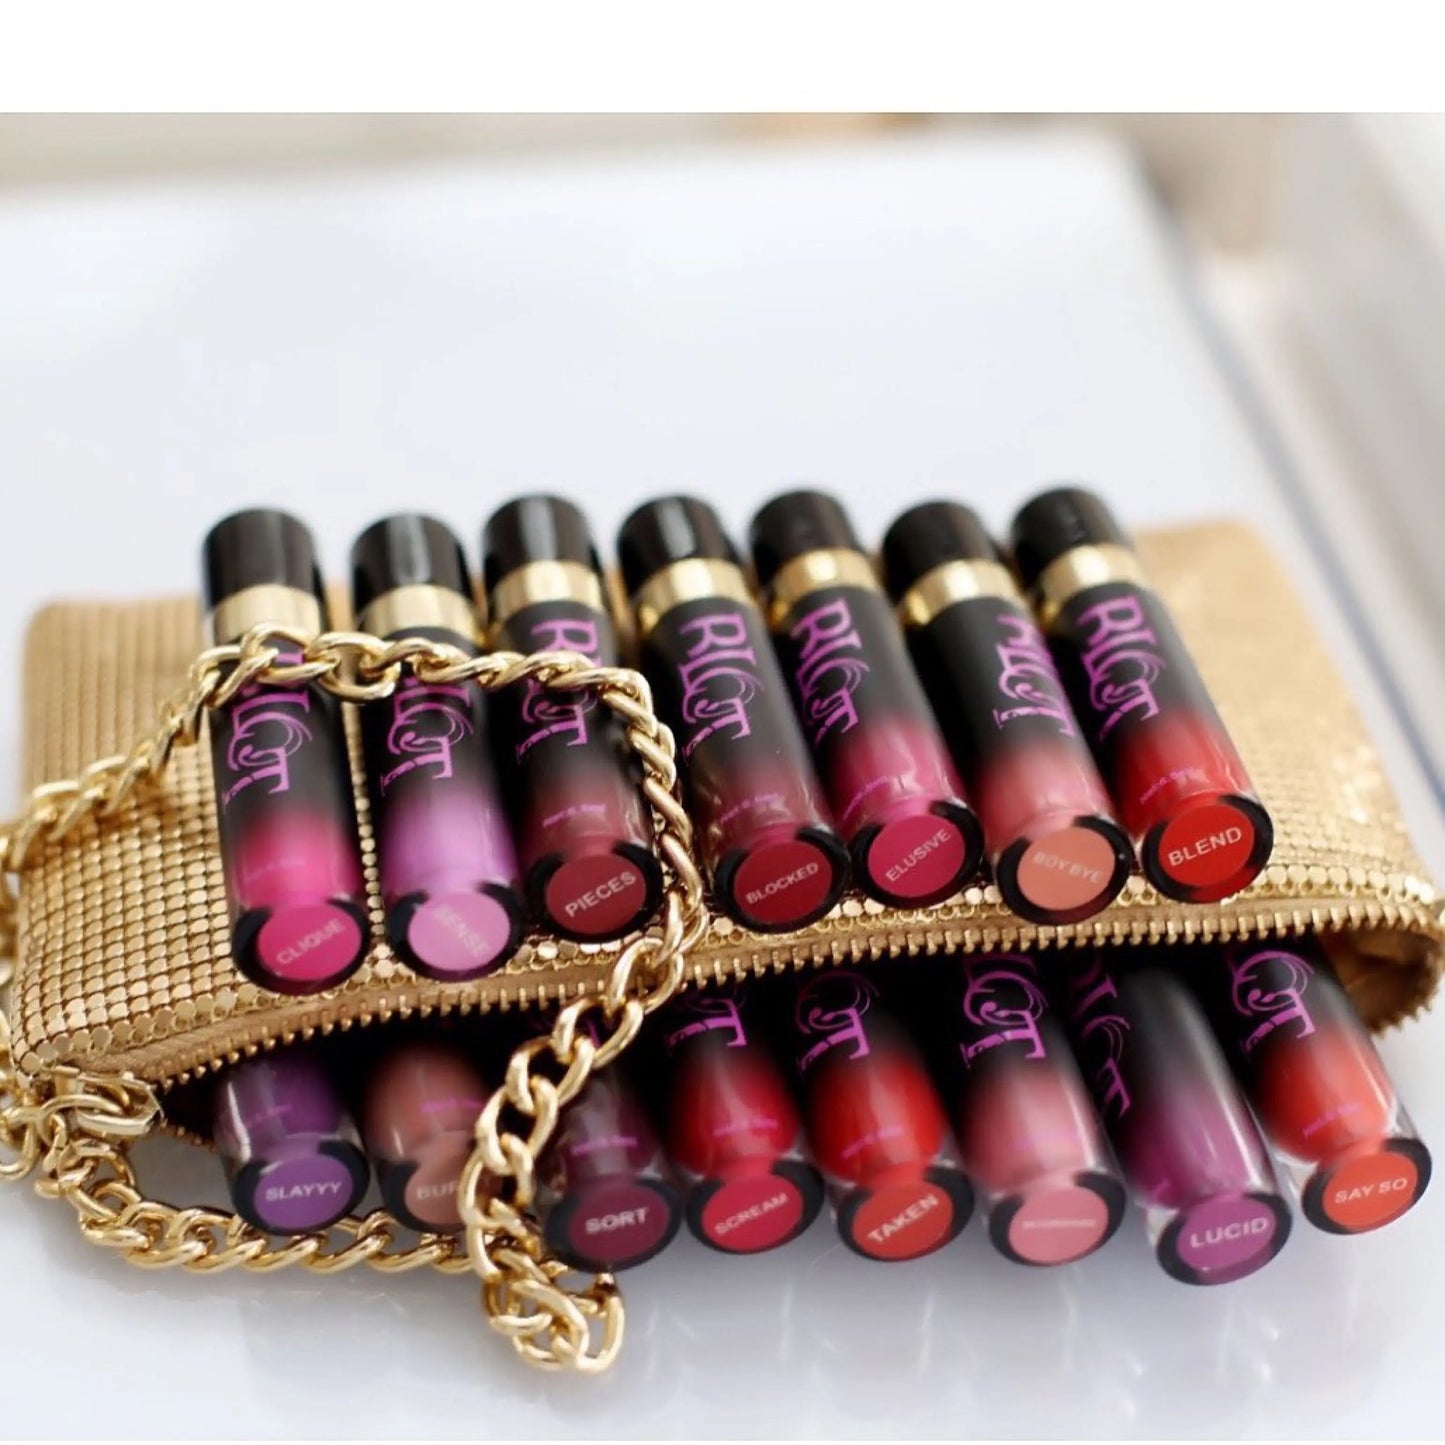 BLOT Luxe Lipstain La Mimz Beauty & Fashion Store